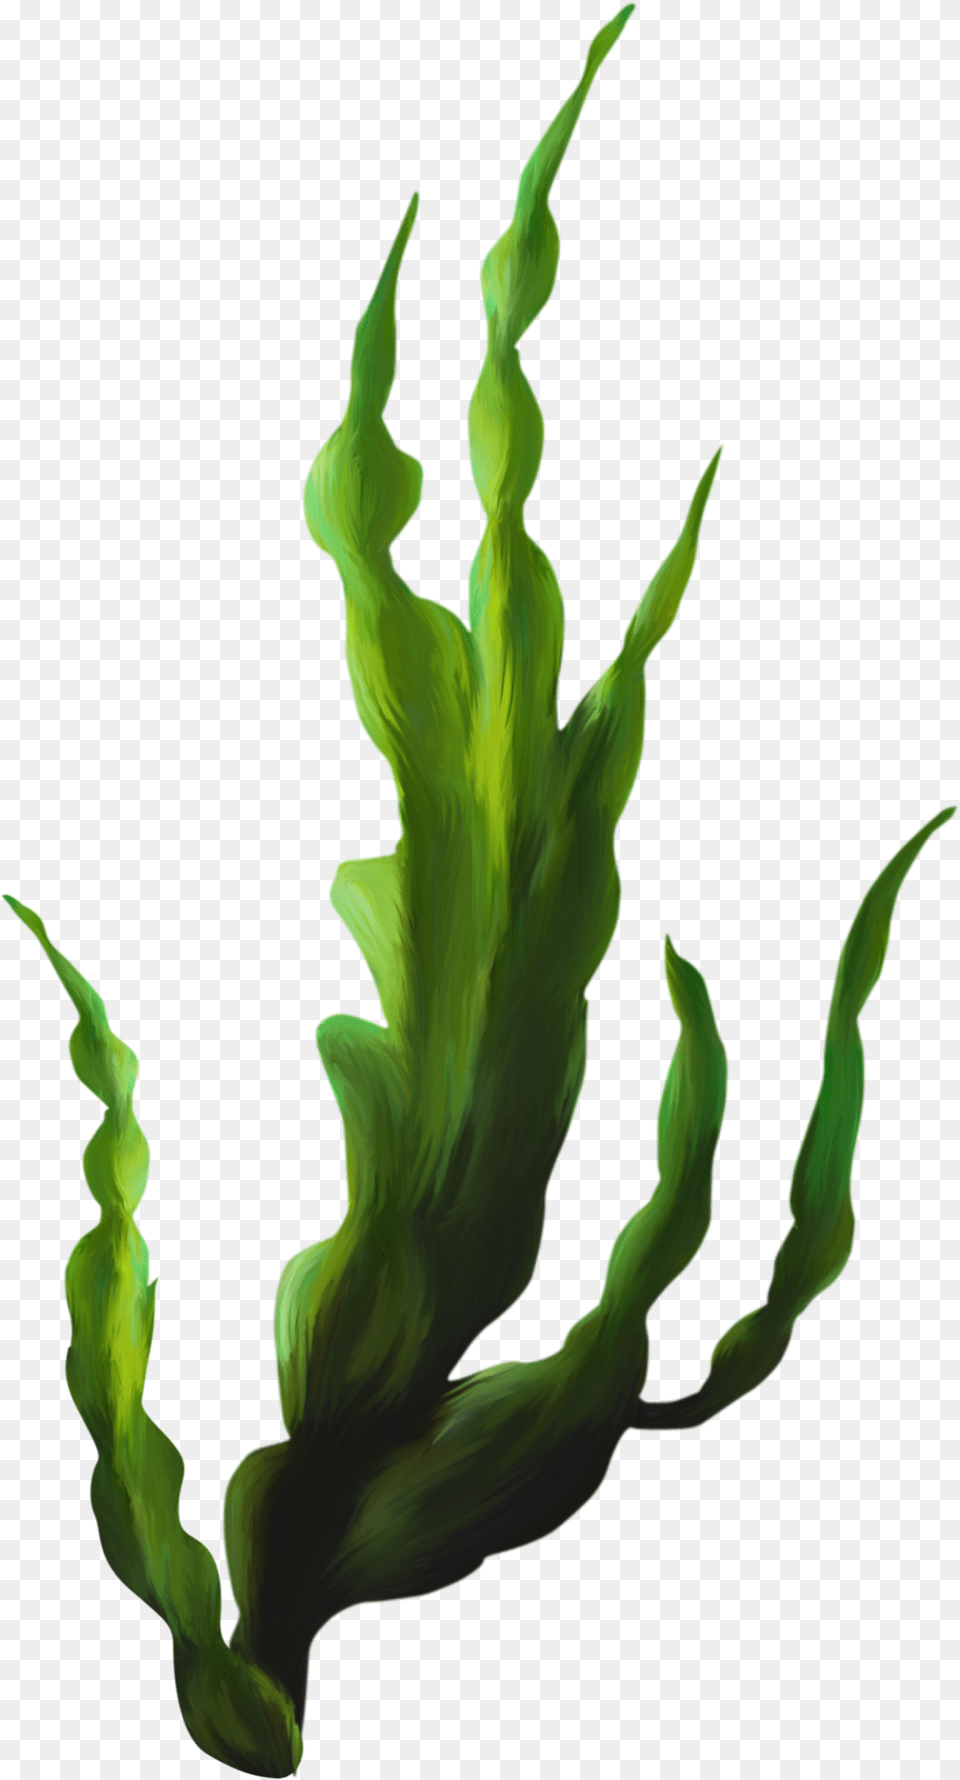 Z Transparent Seaweed, Grass, Green, Plant, Leaf Png Image